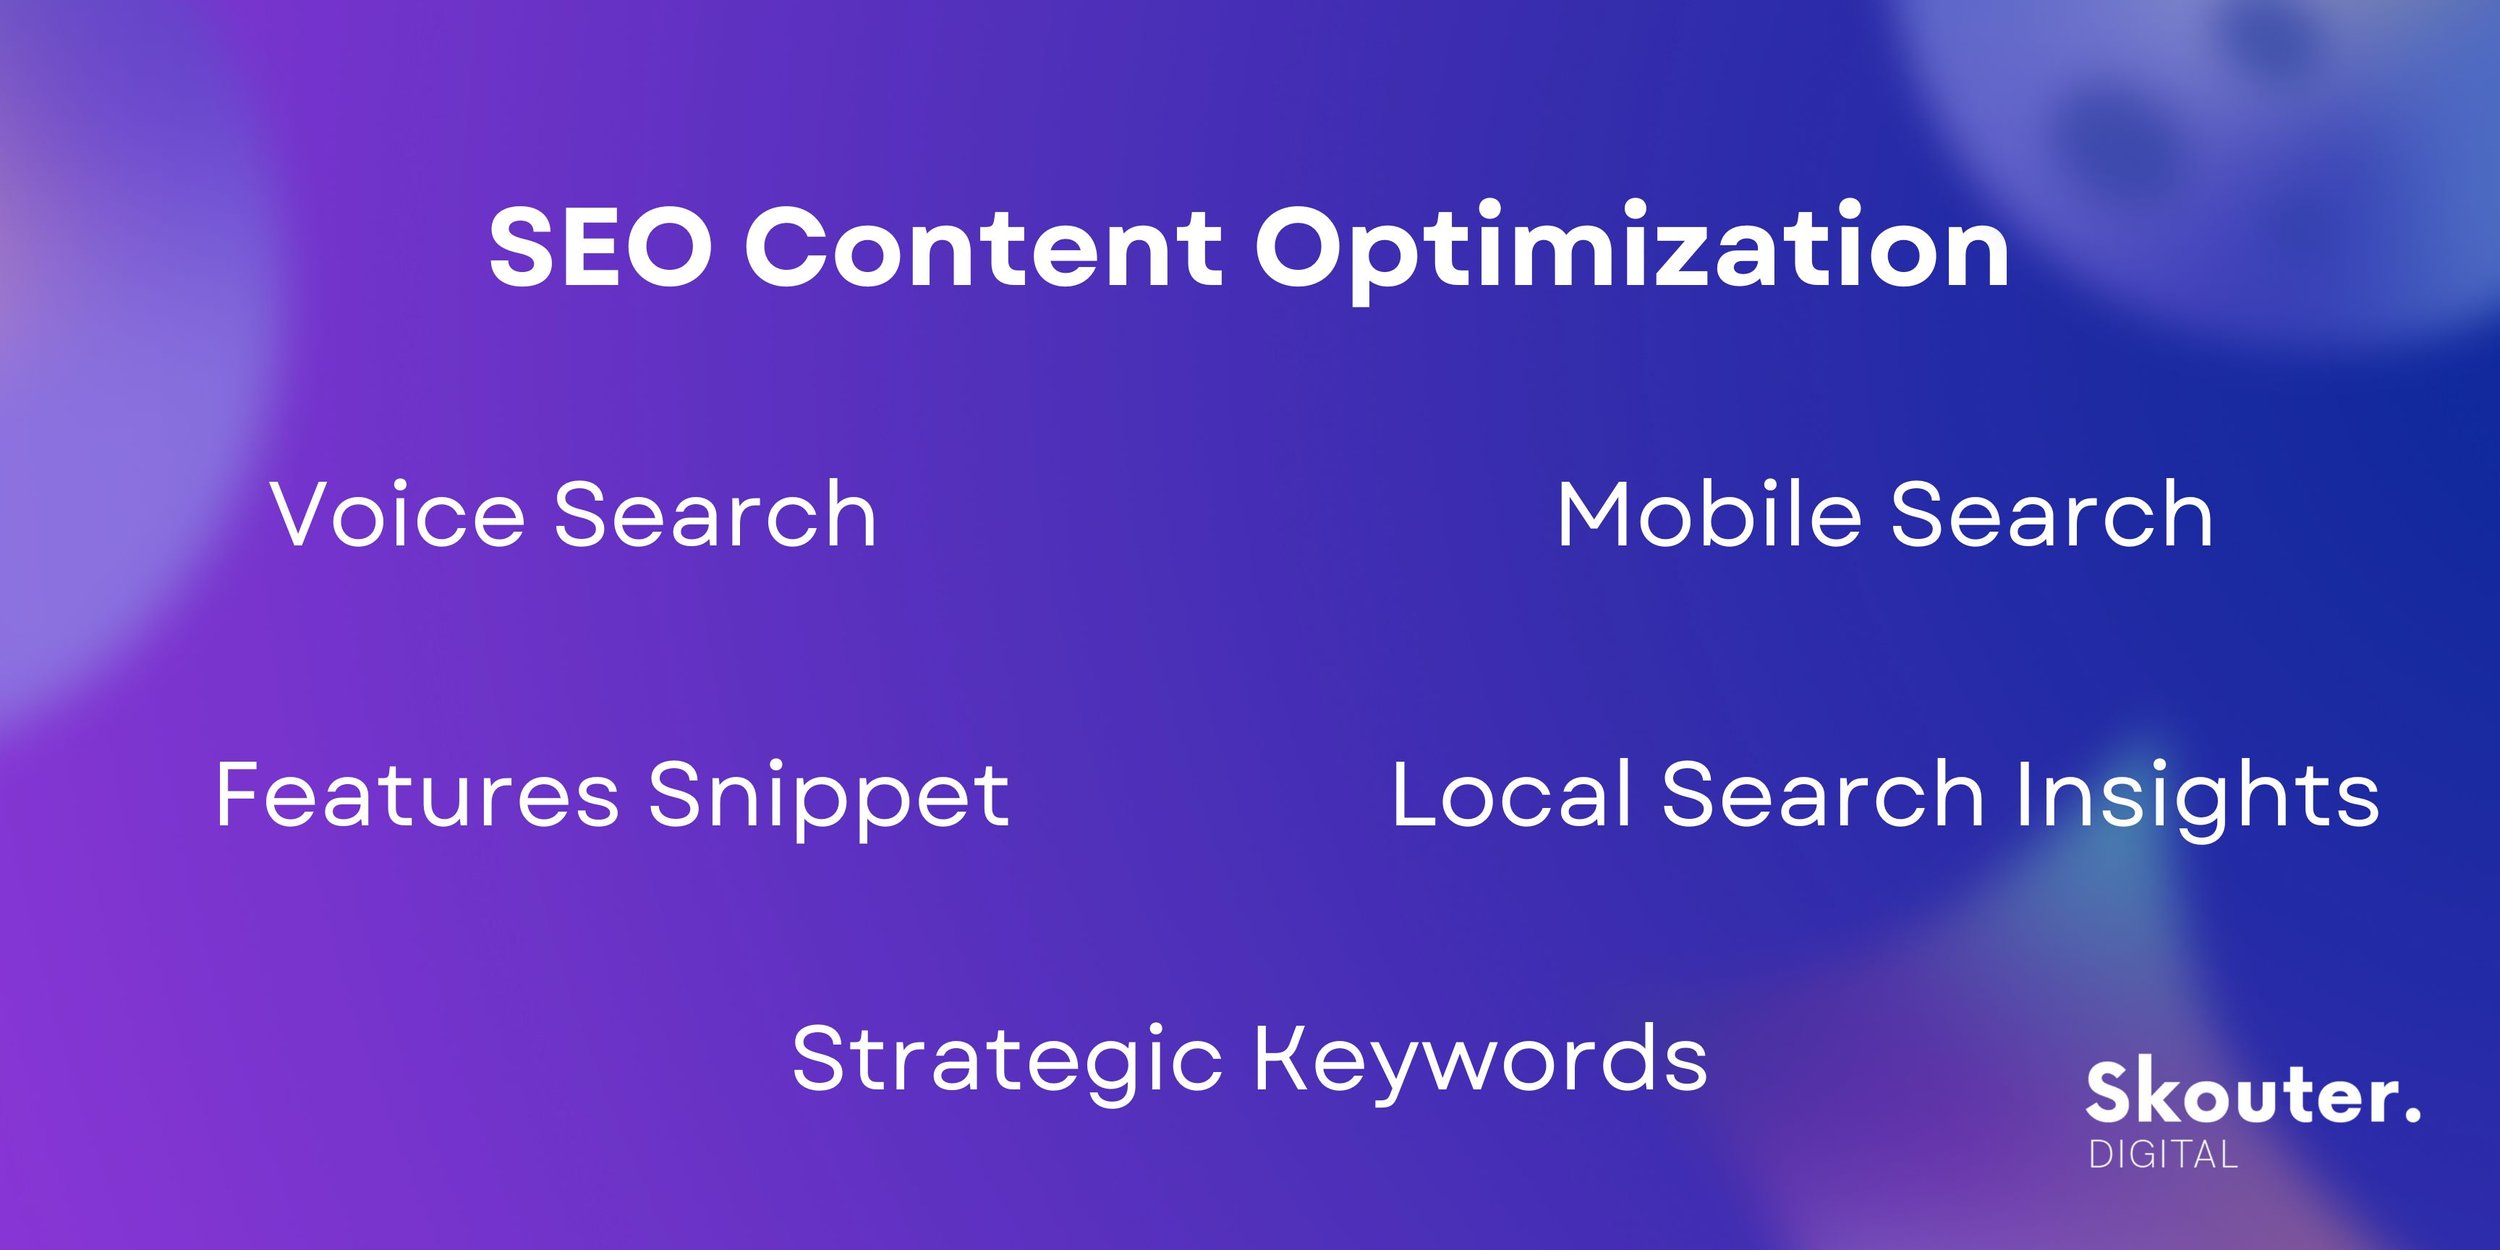 seo content optimization, seo content strategy, seo content optimization tips